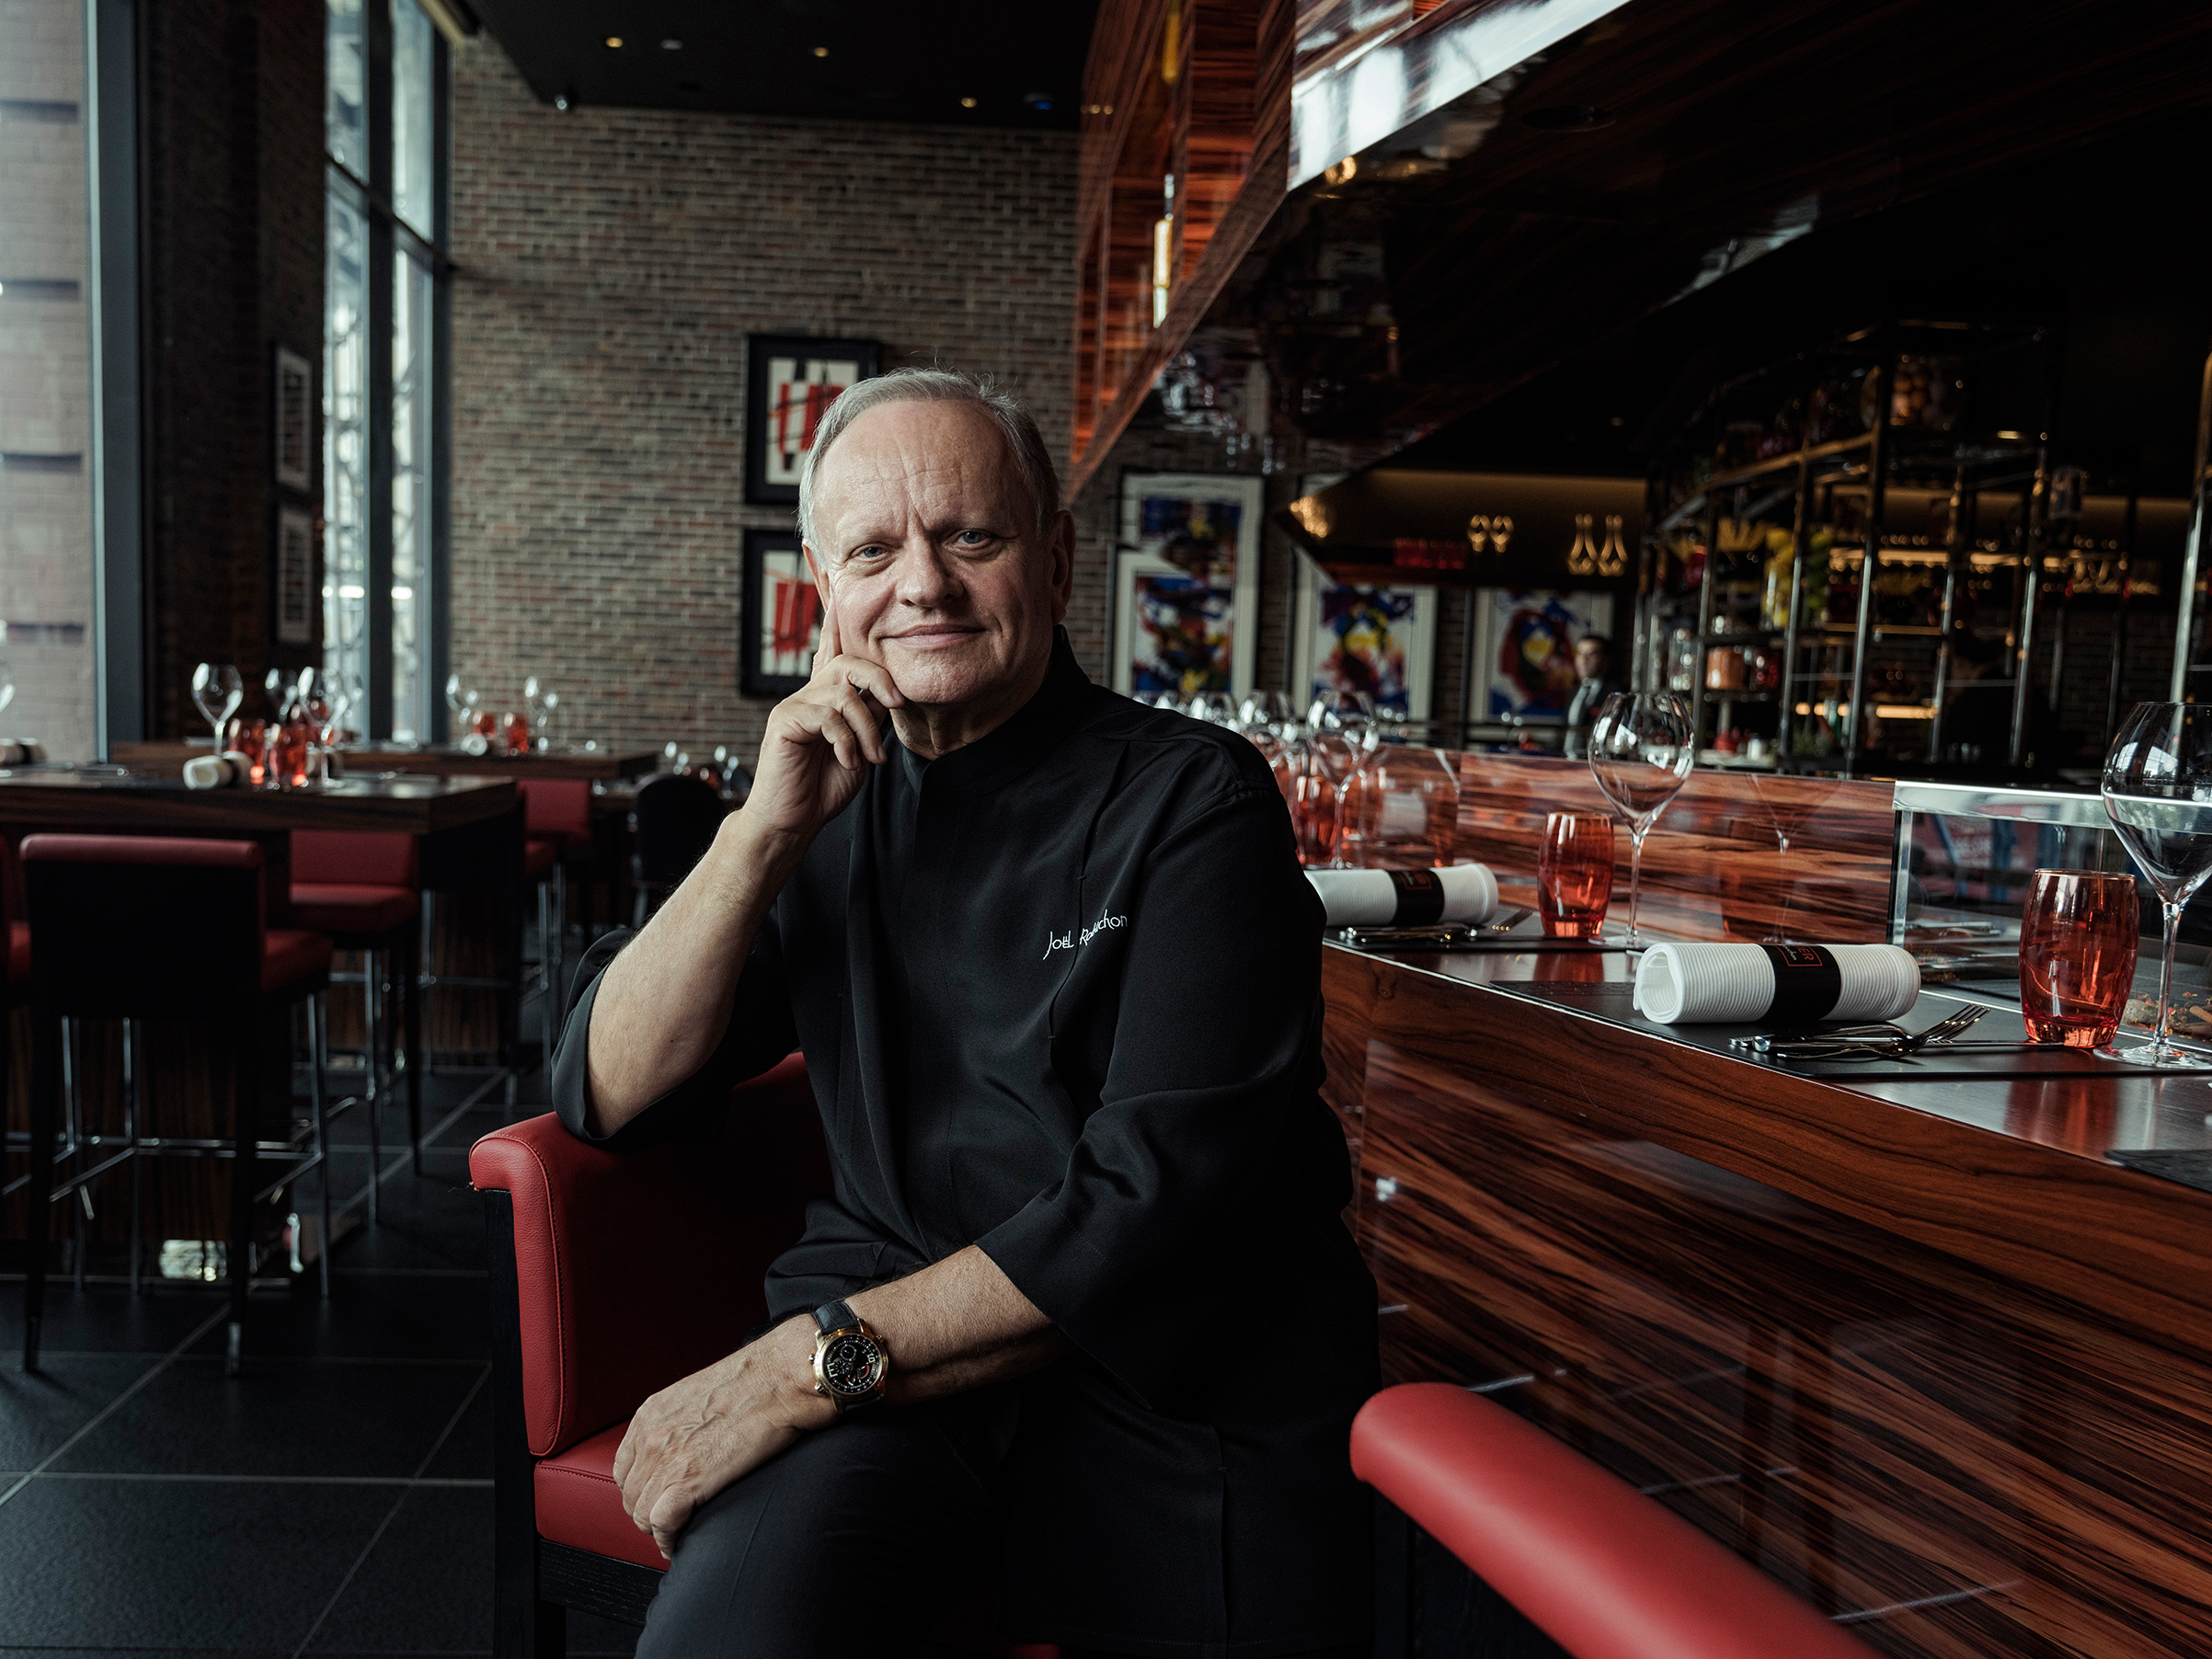 Robuchon at his restaurant L’Atelier de Joël Robuchon in Manhattan, on Oct. 23, 2017; the chef reached 32 Michelin stars (Sasha Maslov—The New York Times/Redux)